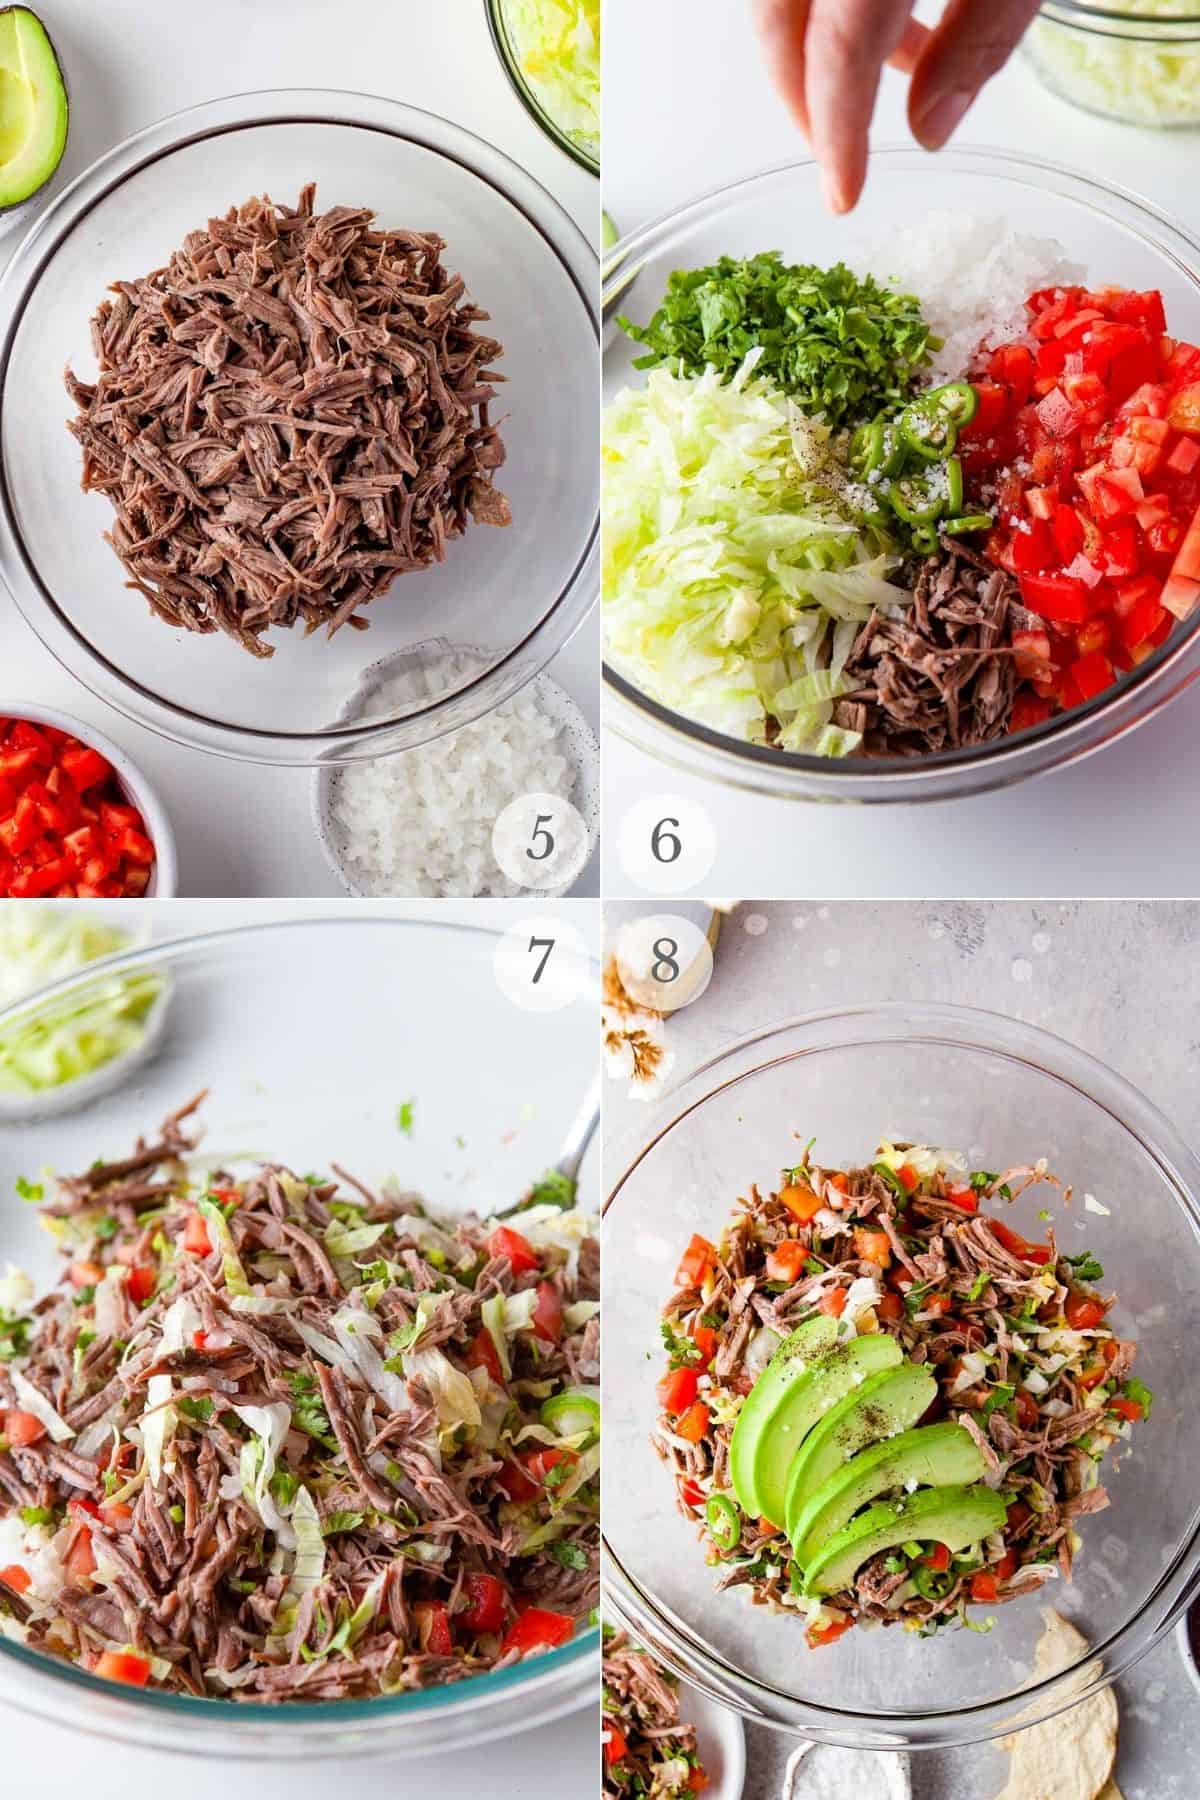 salpicon shredded beef salad recipe steps 5-8